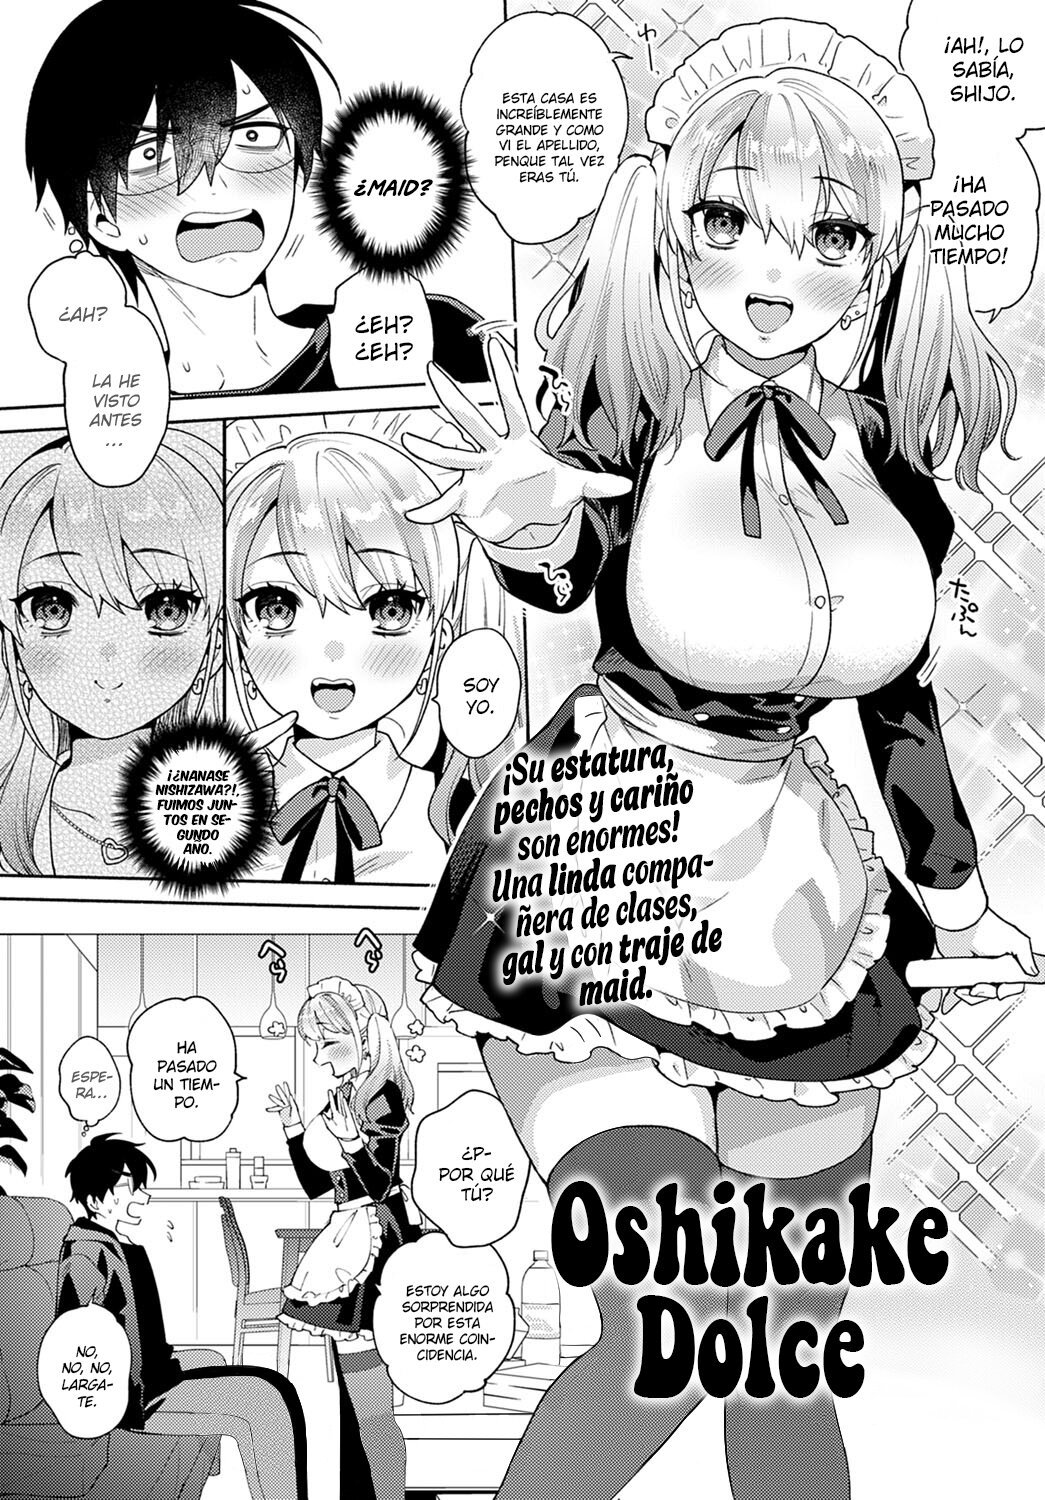 Oshikake dolce - 3